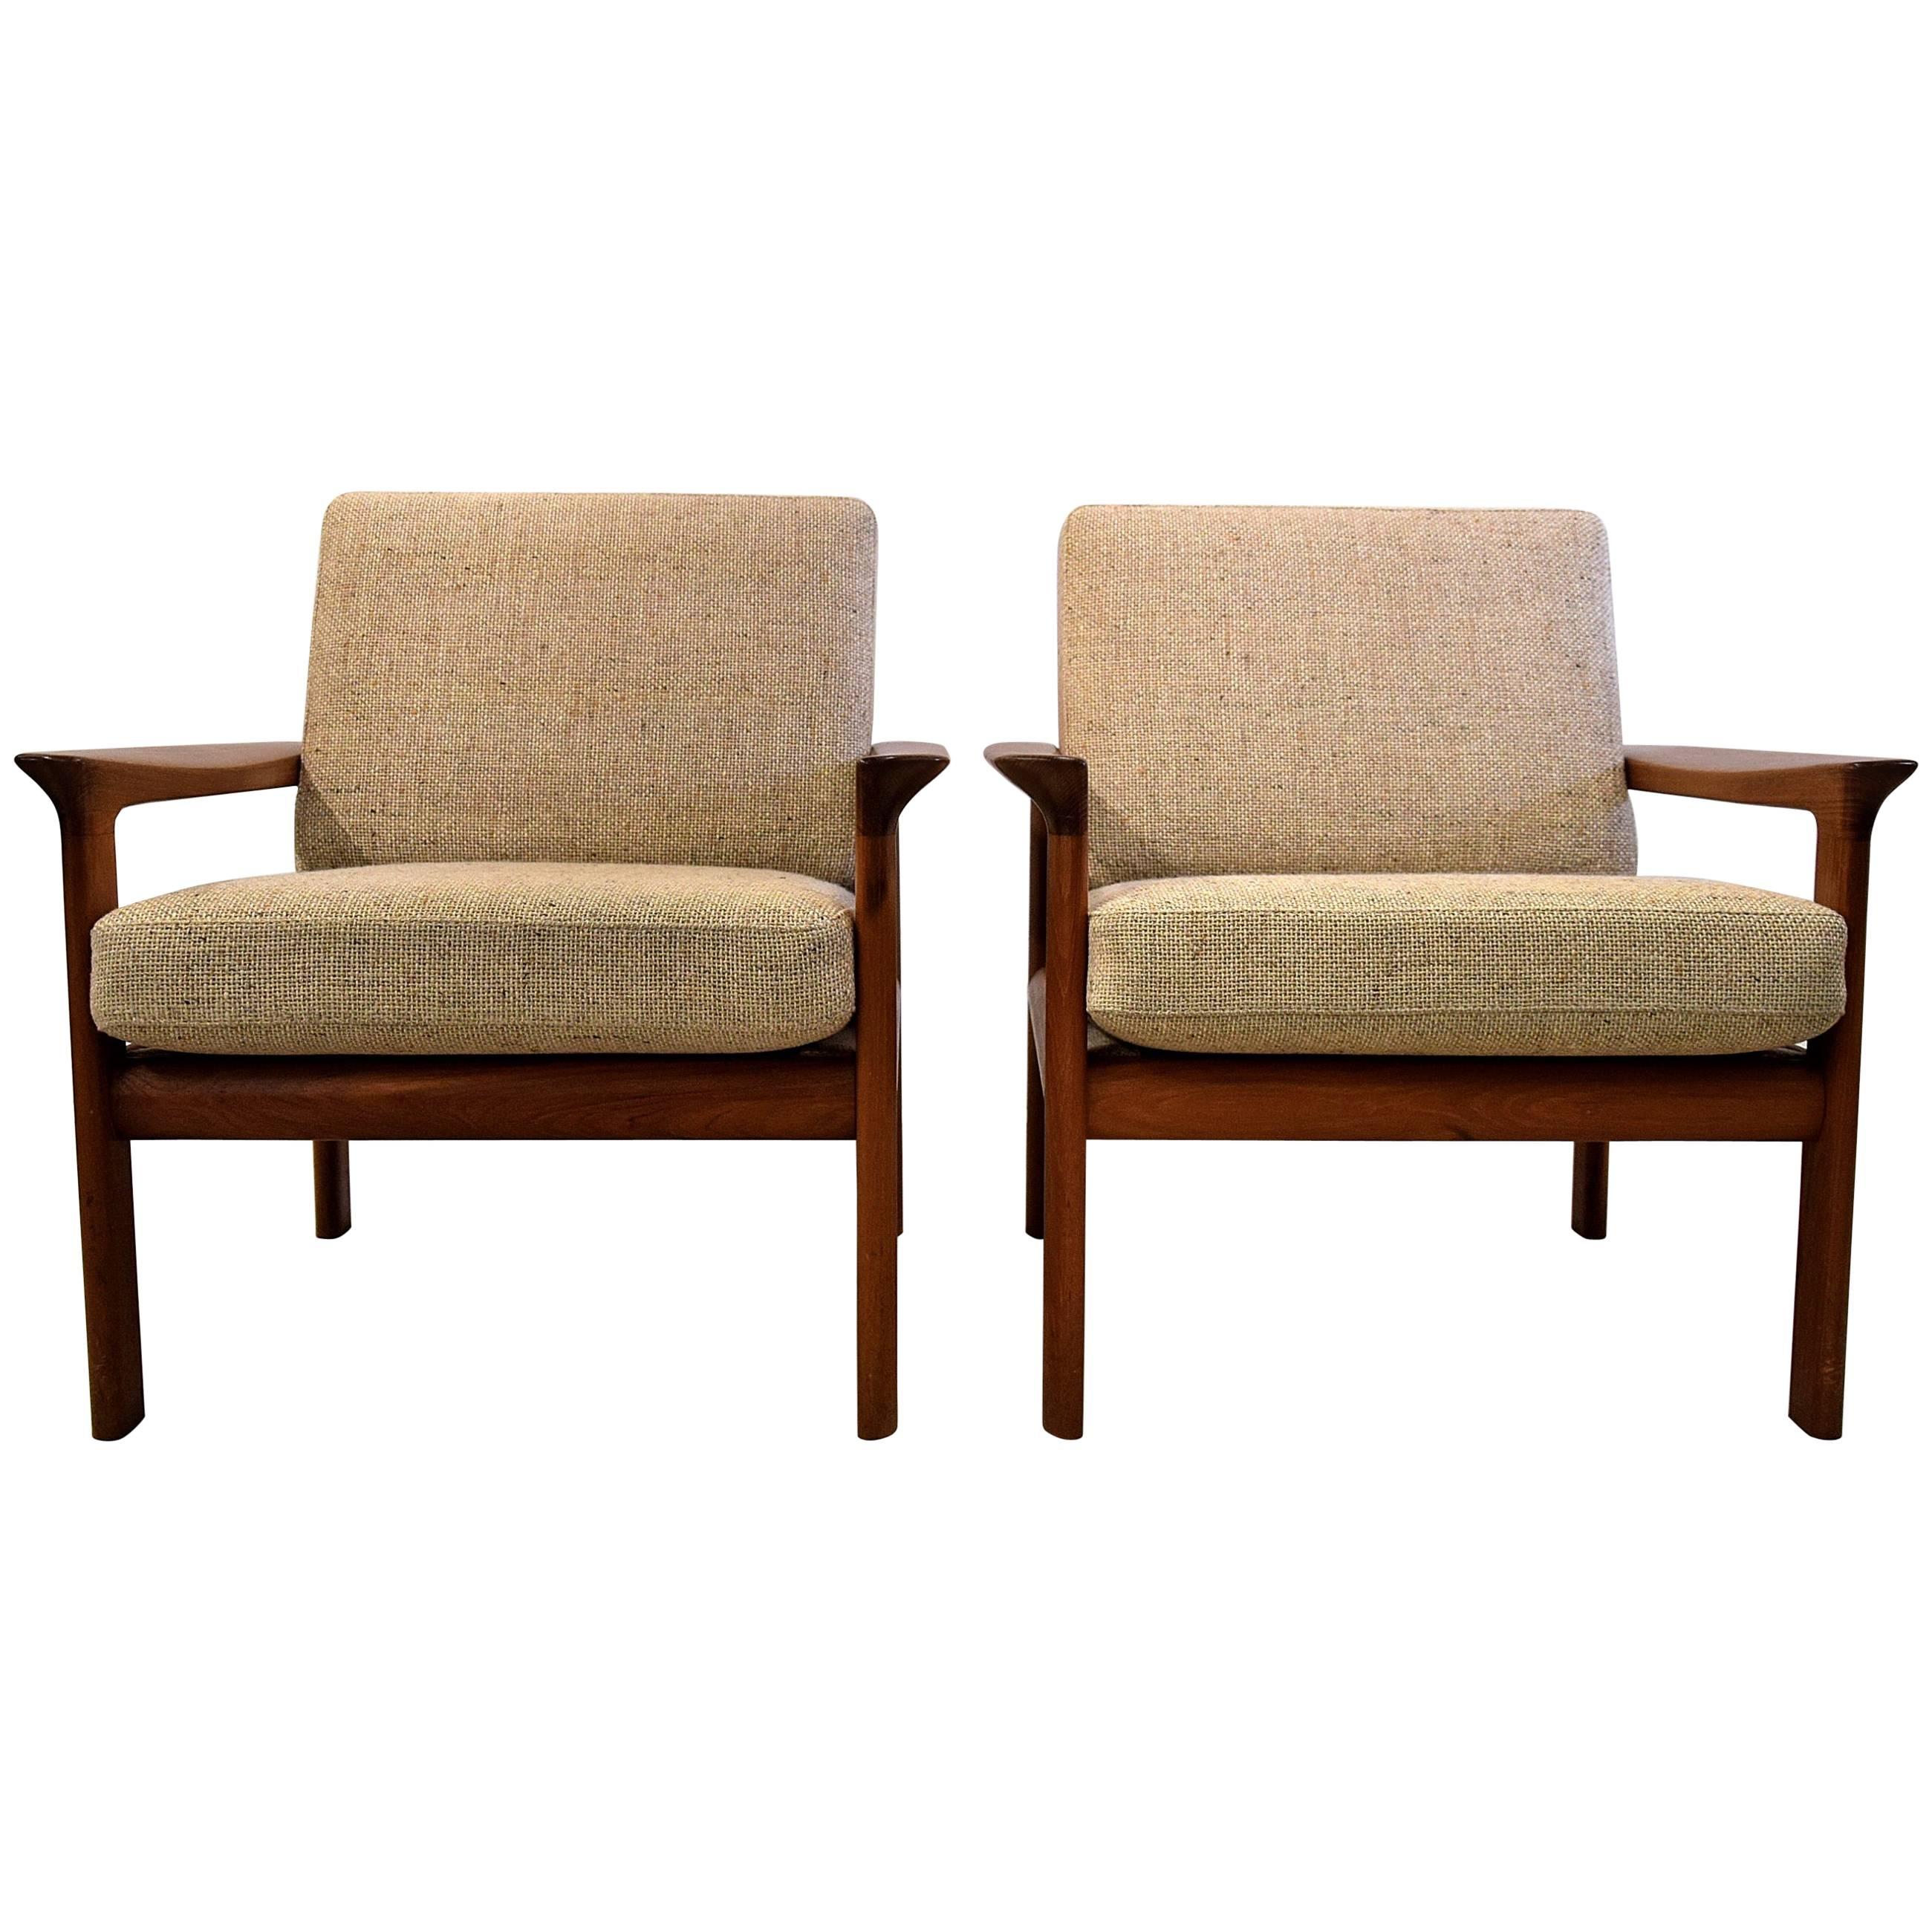 Sven Ellekaer Mid Century Modern Teak Lounge Chairs